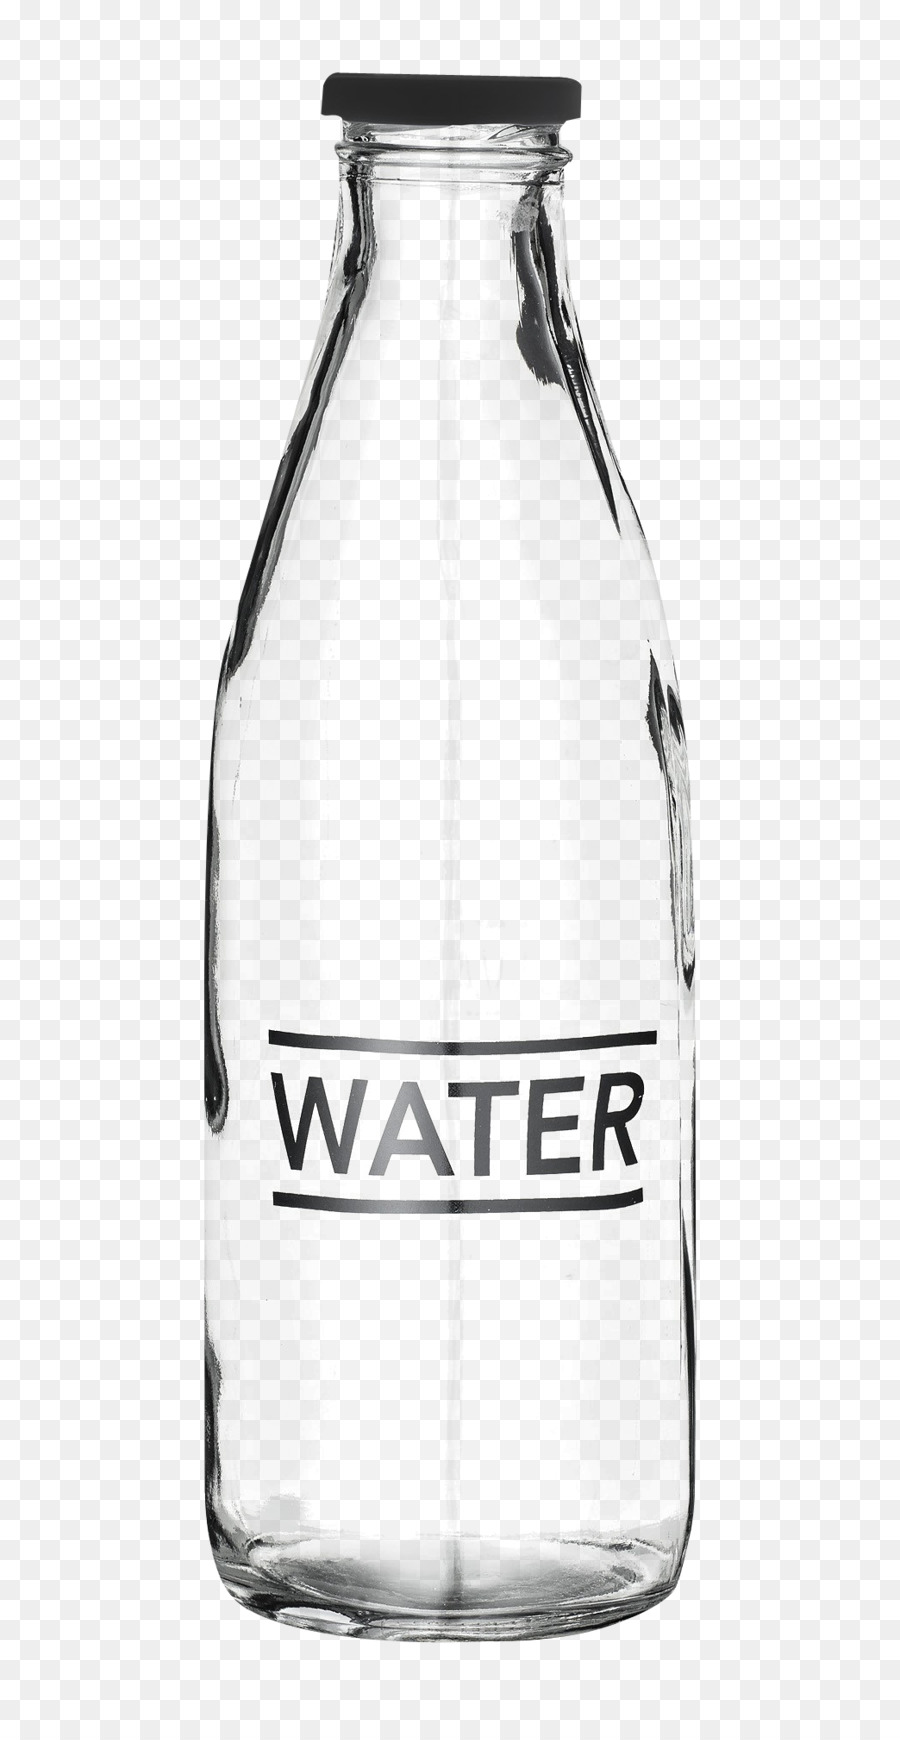 Water bottle Glass Bottled water - Glass Water Bottle png download - 1044*2000 - Free Transparent Bottle png Download.